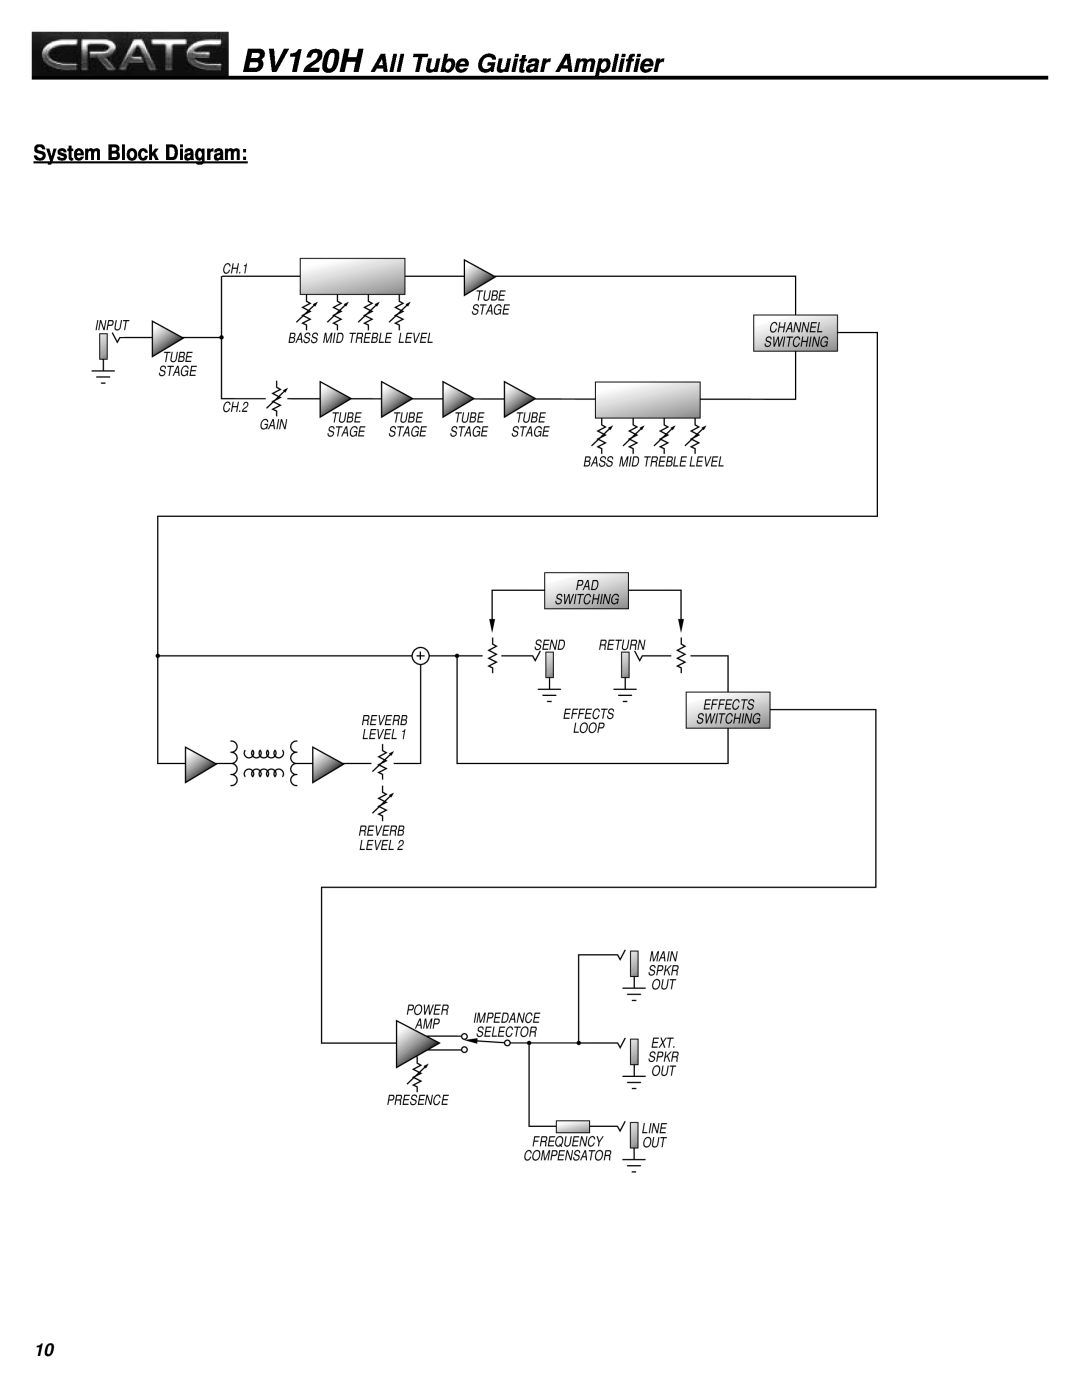 Crate Amplifiers manual System Block Diagram, BV120H All Tube Guitar Amplifier 